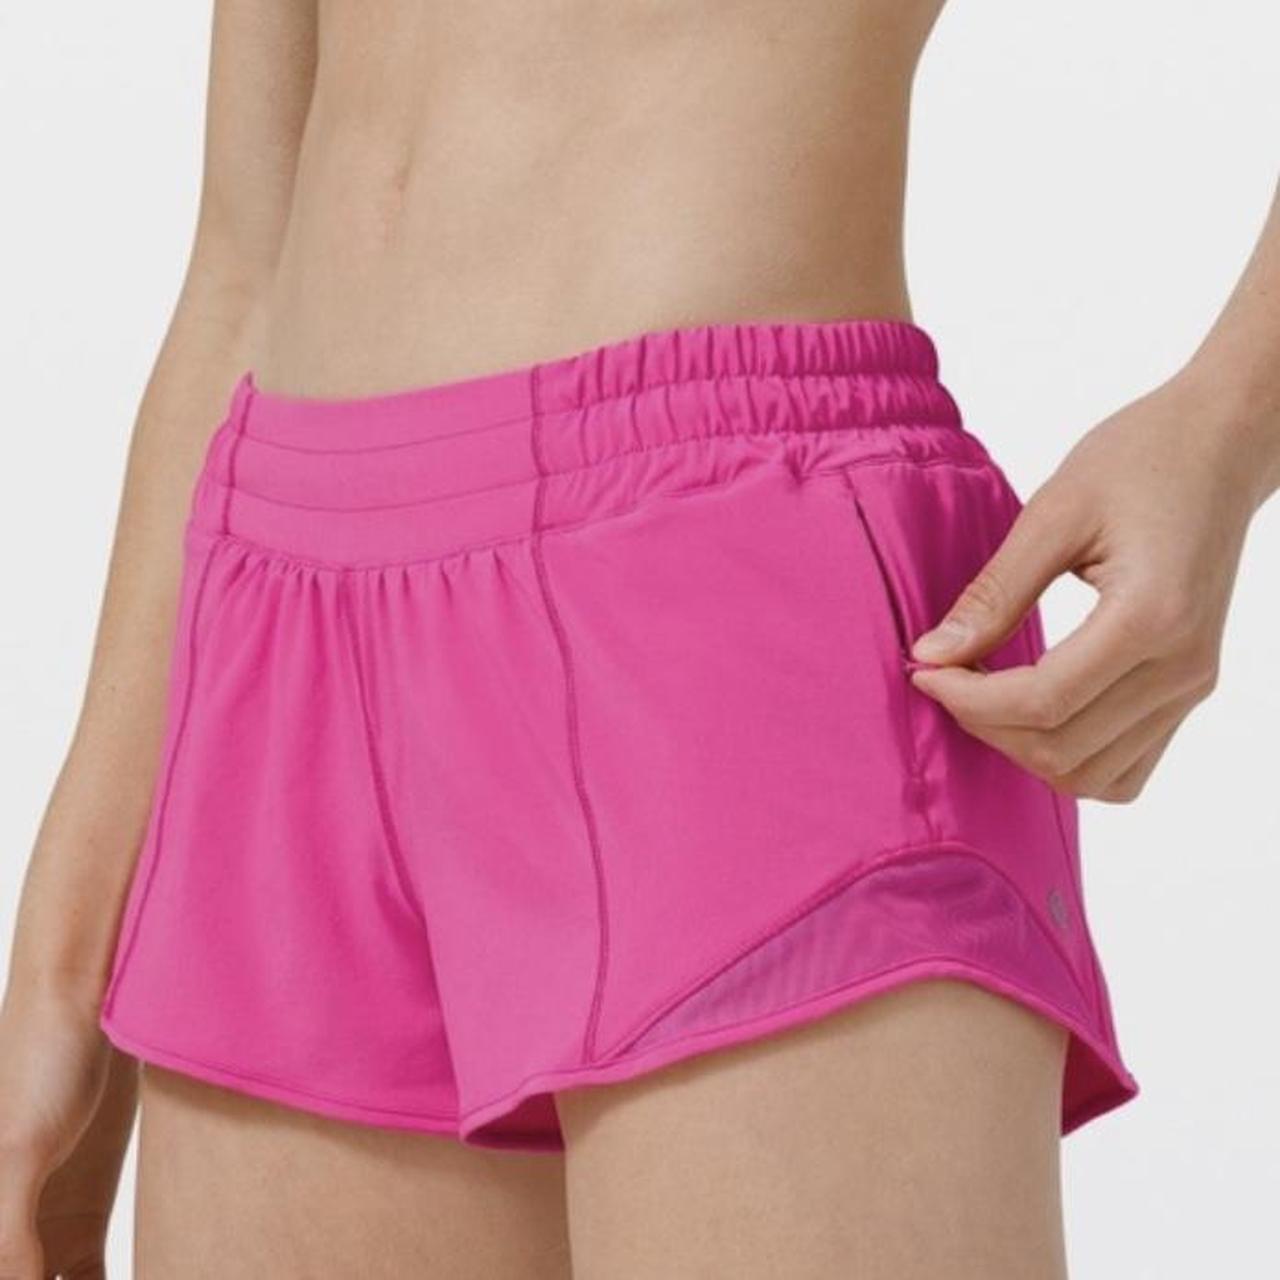 Sonic pink speed up Lululemon shorts 2.5 inch new - Depop